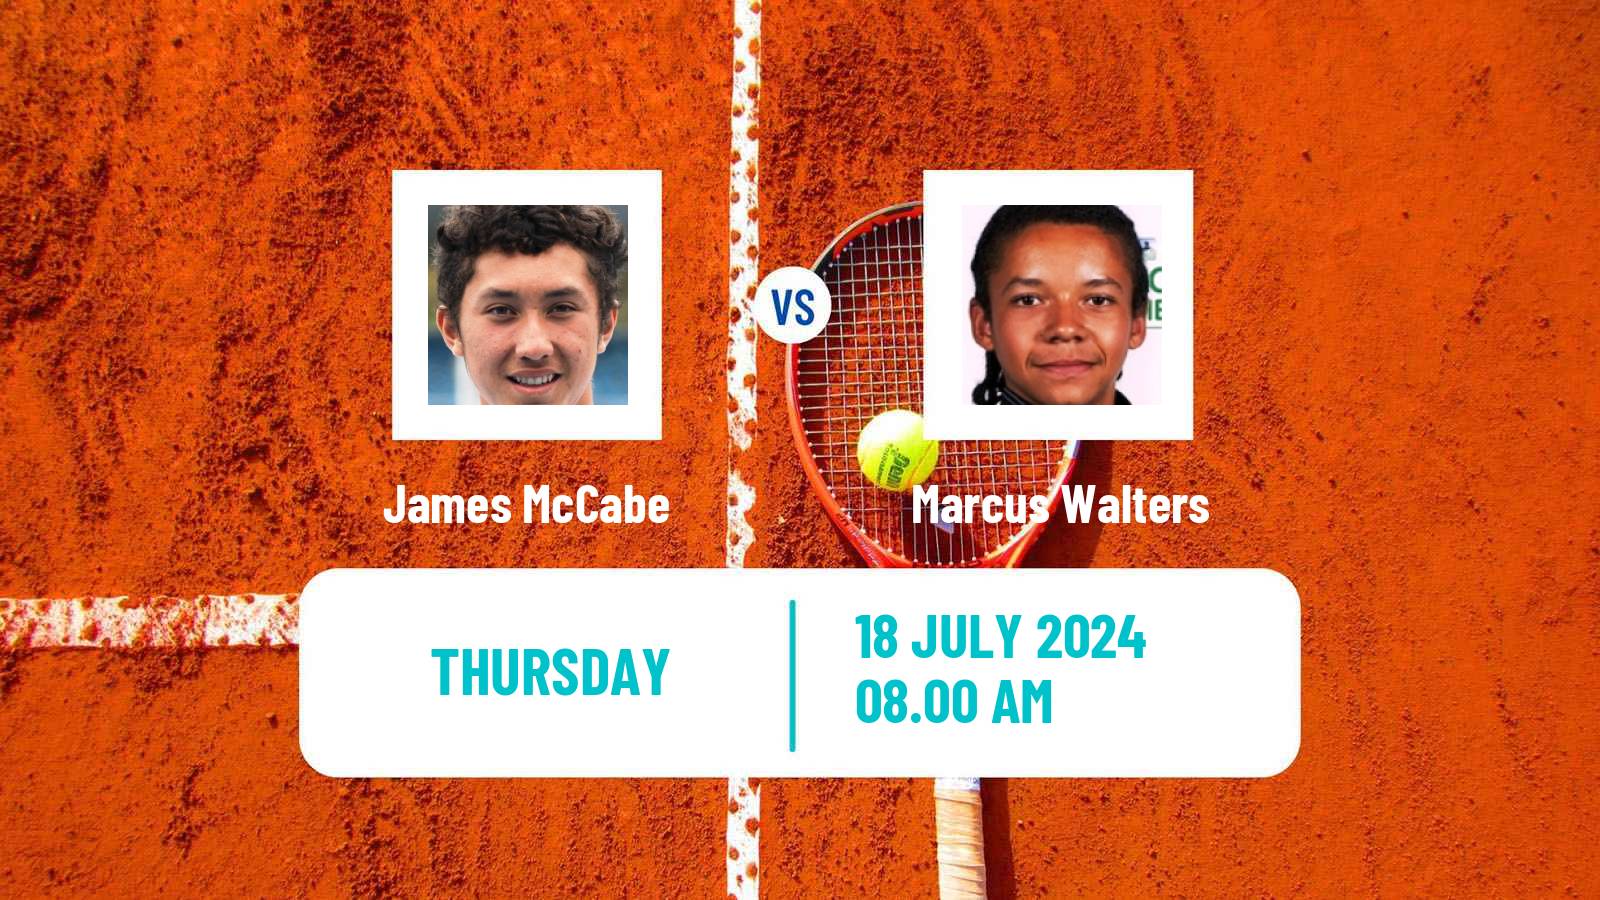 Tennis ITF M25 Nottingham 4 Men James McCabe - Marcus Walters